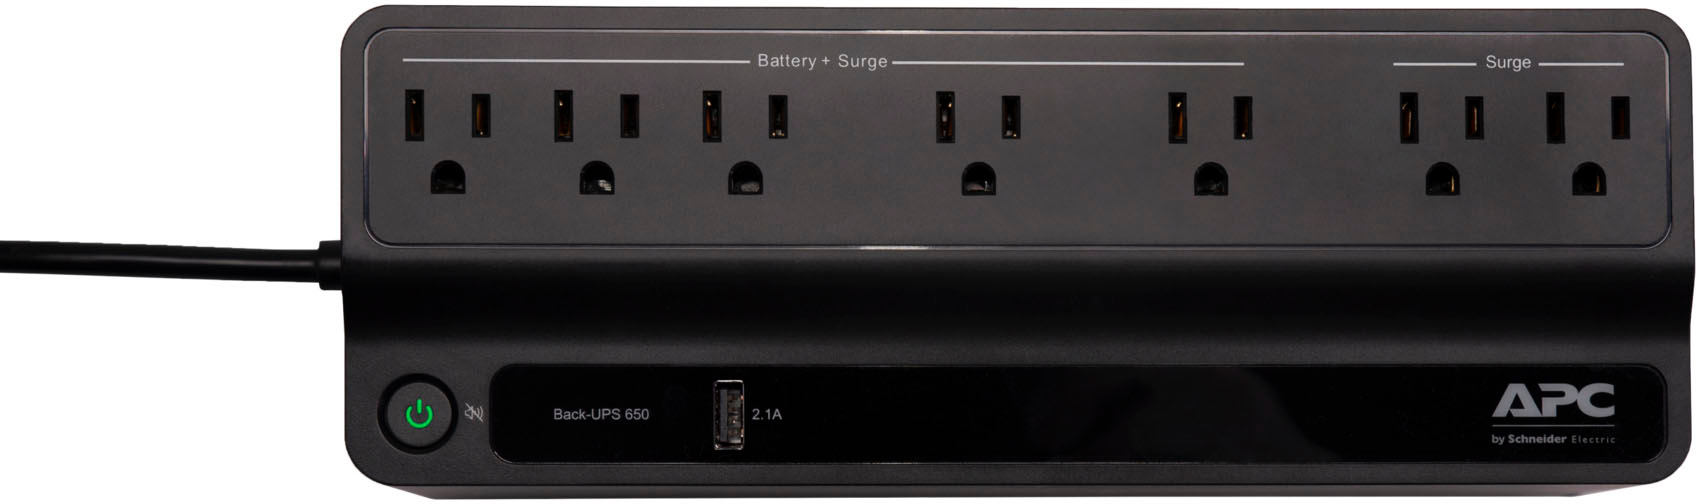 Hors ligne- APC APC Back-UPS 650VA 230V 1 port de charge USB USV Veille 0,65 kV 